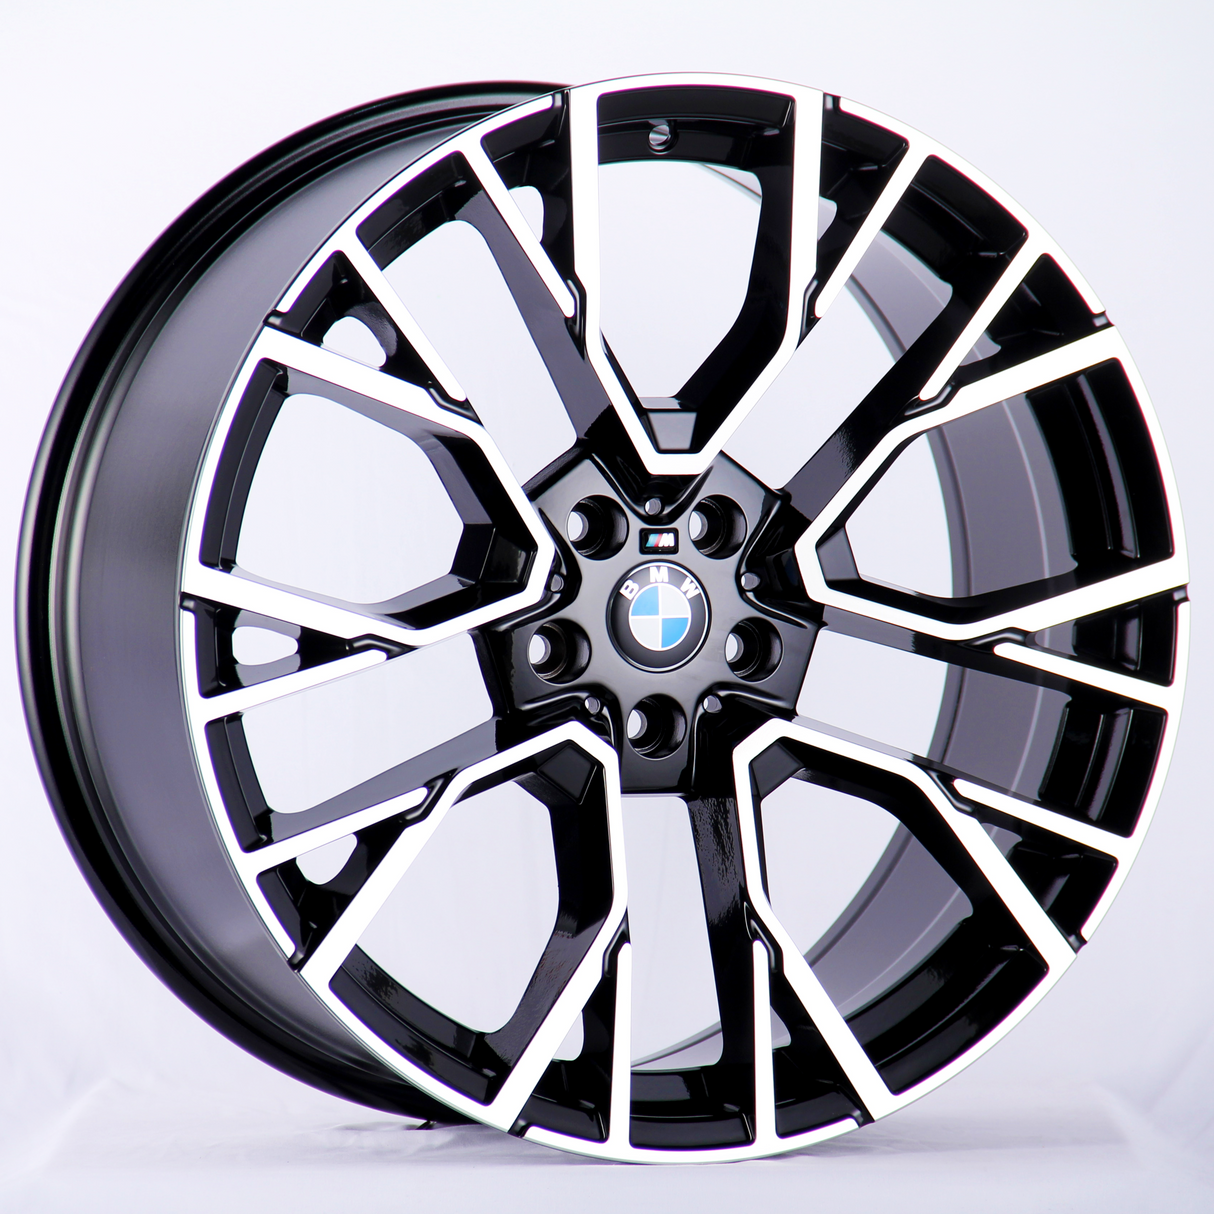 X5 - F15: 22" Diamond Cut Black M Performance Alloy Wheels 14-18